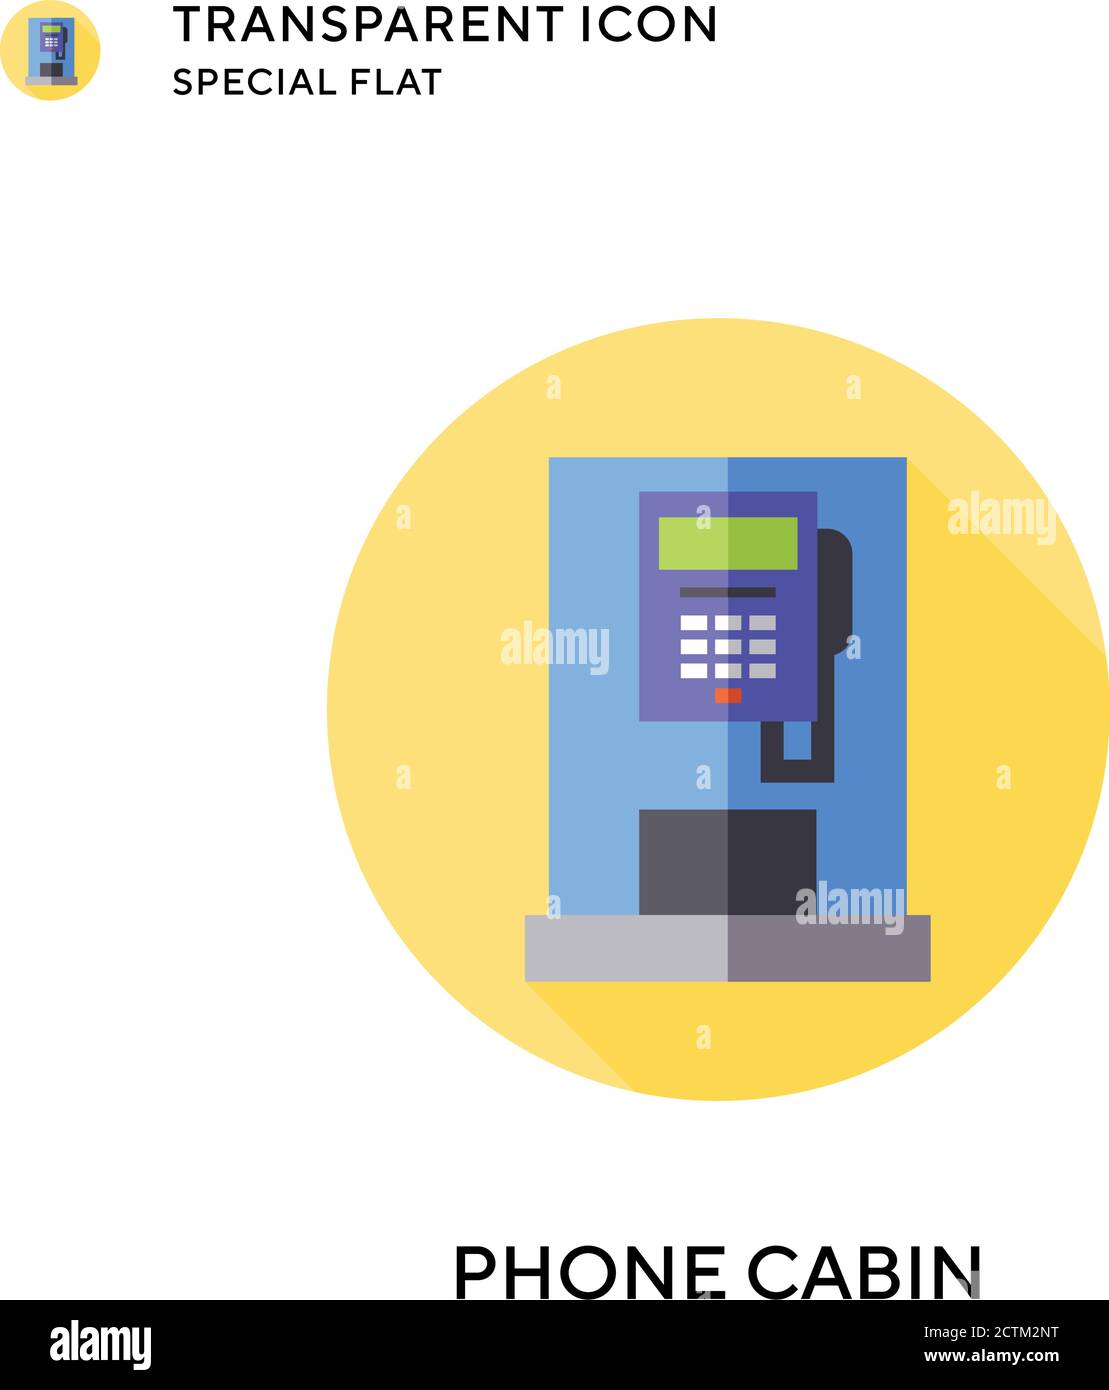 Phone cabin vector icon. Flat style illustration. EPS 10 vector. Stock Vector